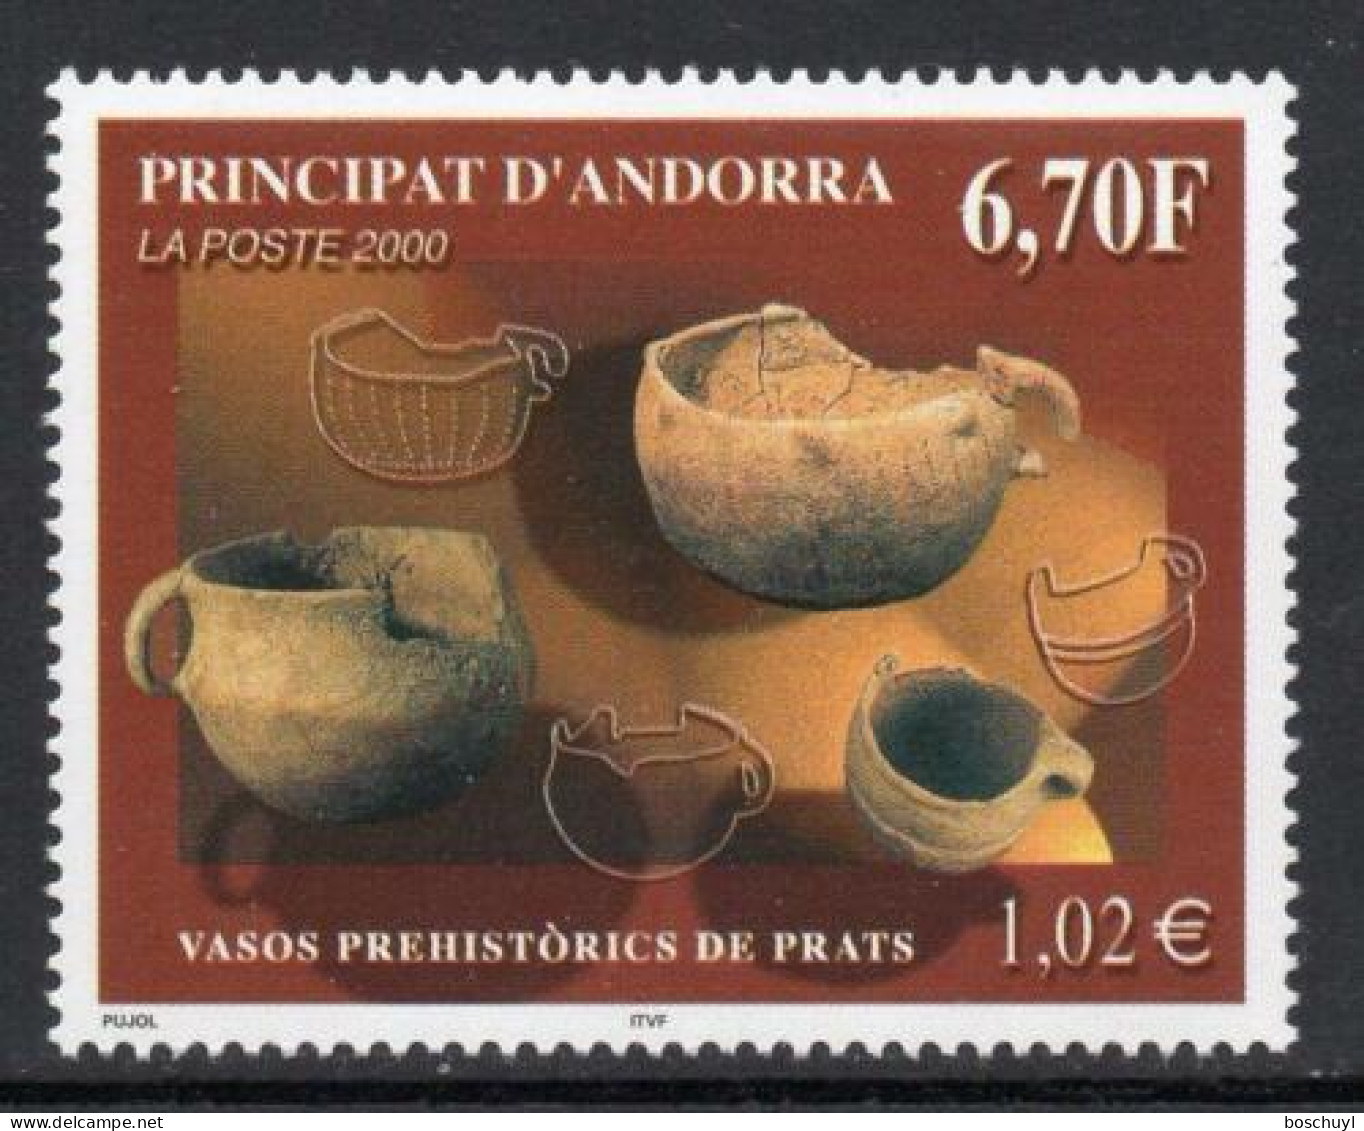 Andorra, French, 2000, Prehistoric Pottery, Ceramics, Archaeology, MNH, Michel 559 - Nuevos